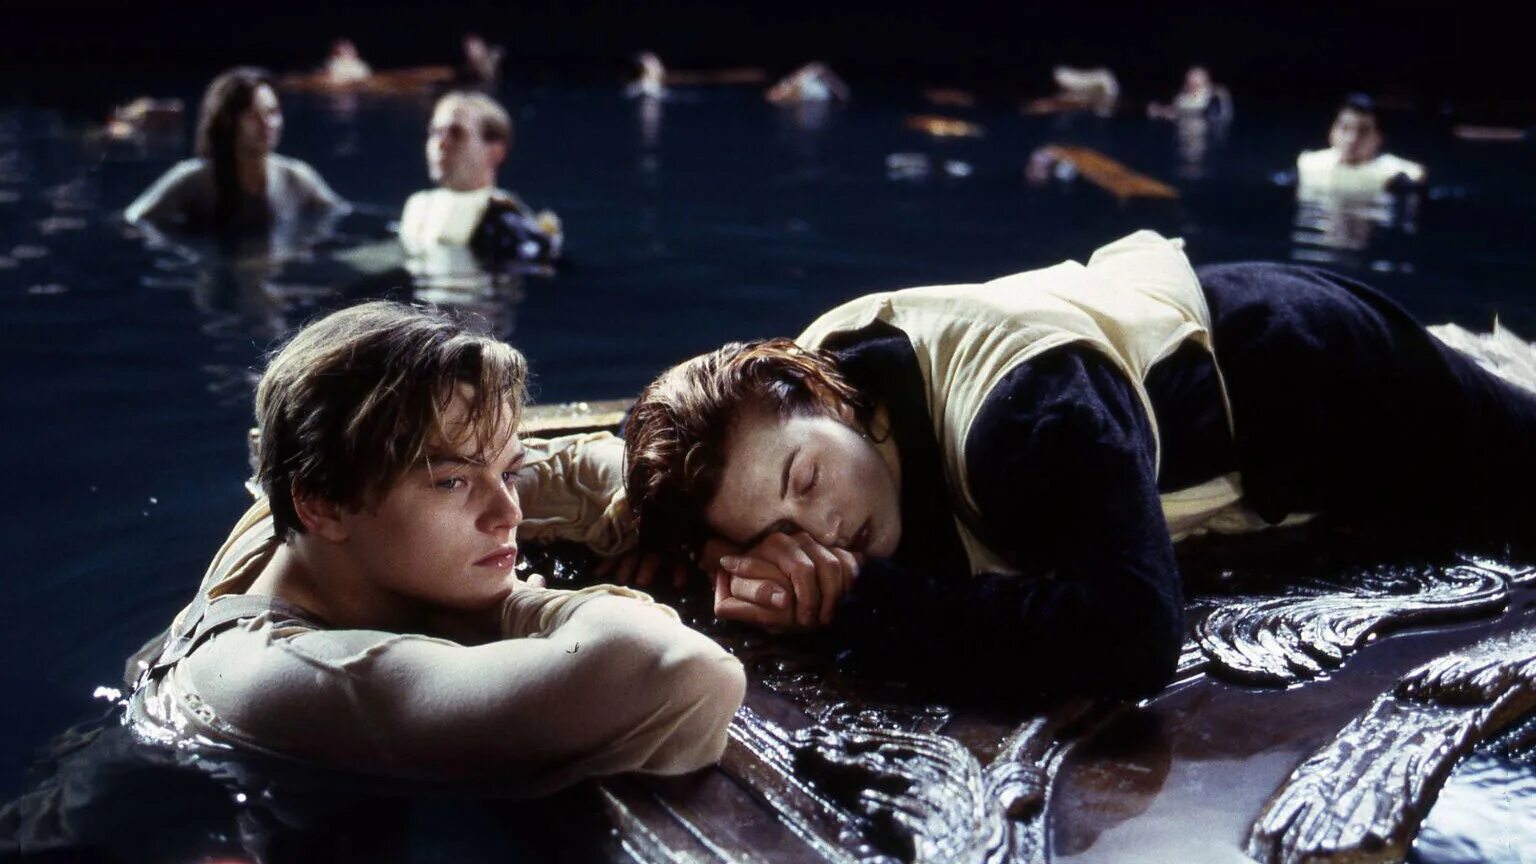 Сцена кадр. ДИКАПРИО О Титанике с Кейт Уинслет. Джеймс Кэмерон 1997 Титаник. Ди Каприо и Уинслет Титаник. Леонардо ди Каприо Титаник.